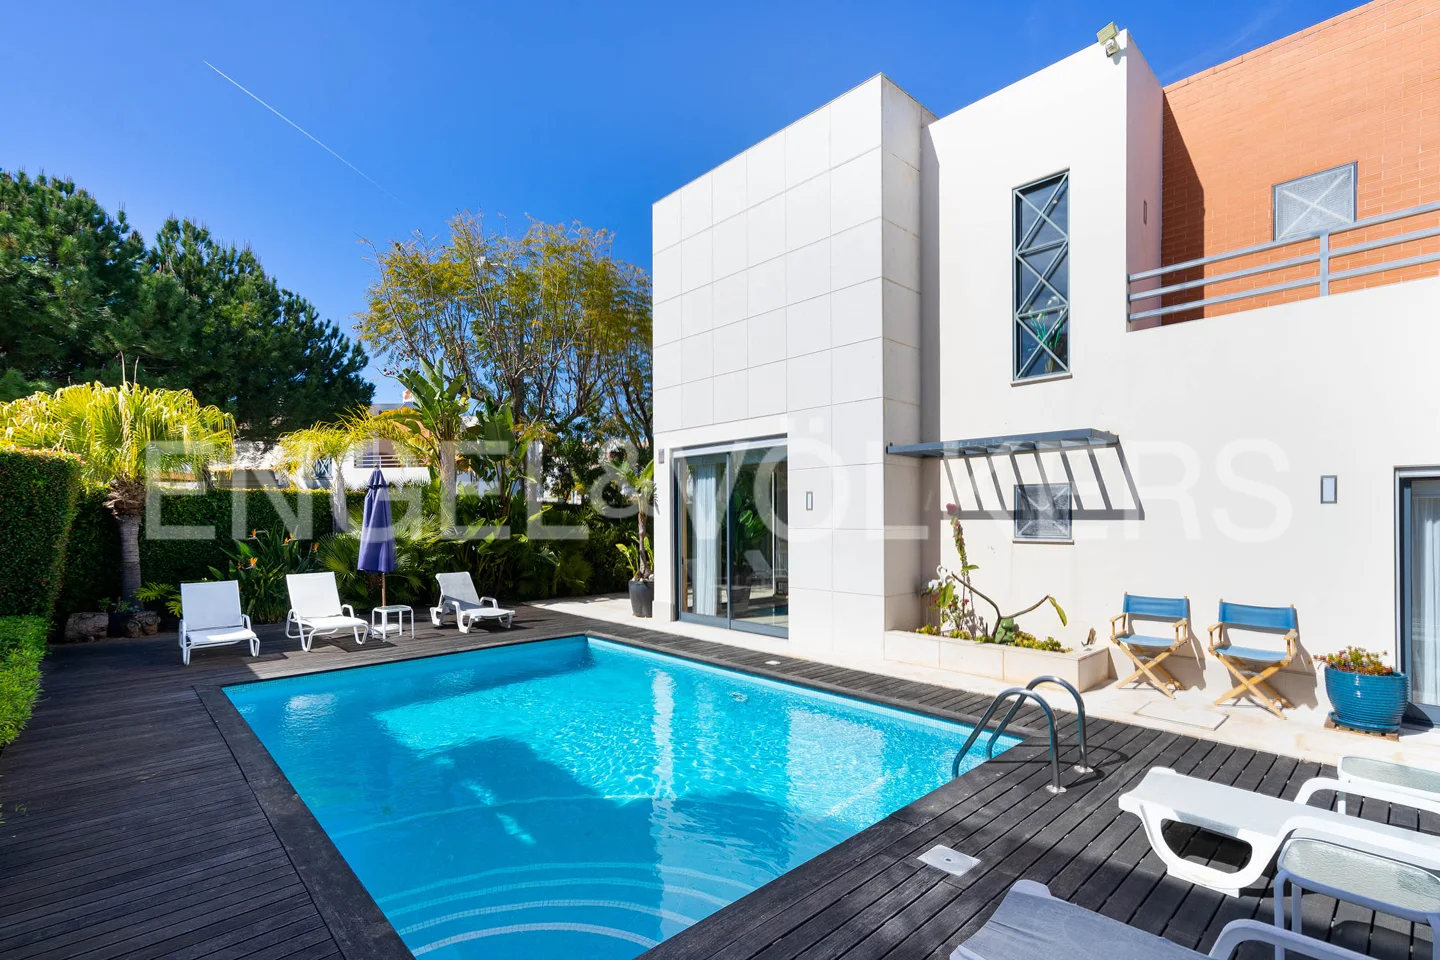 Fantastic 4-bedroom villa with pool in Albufeira